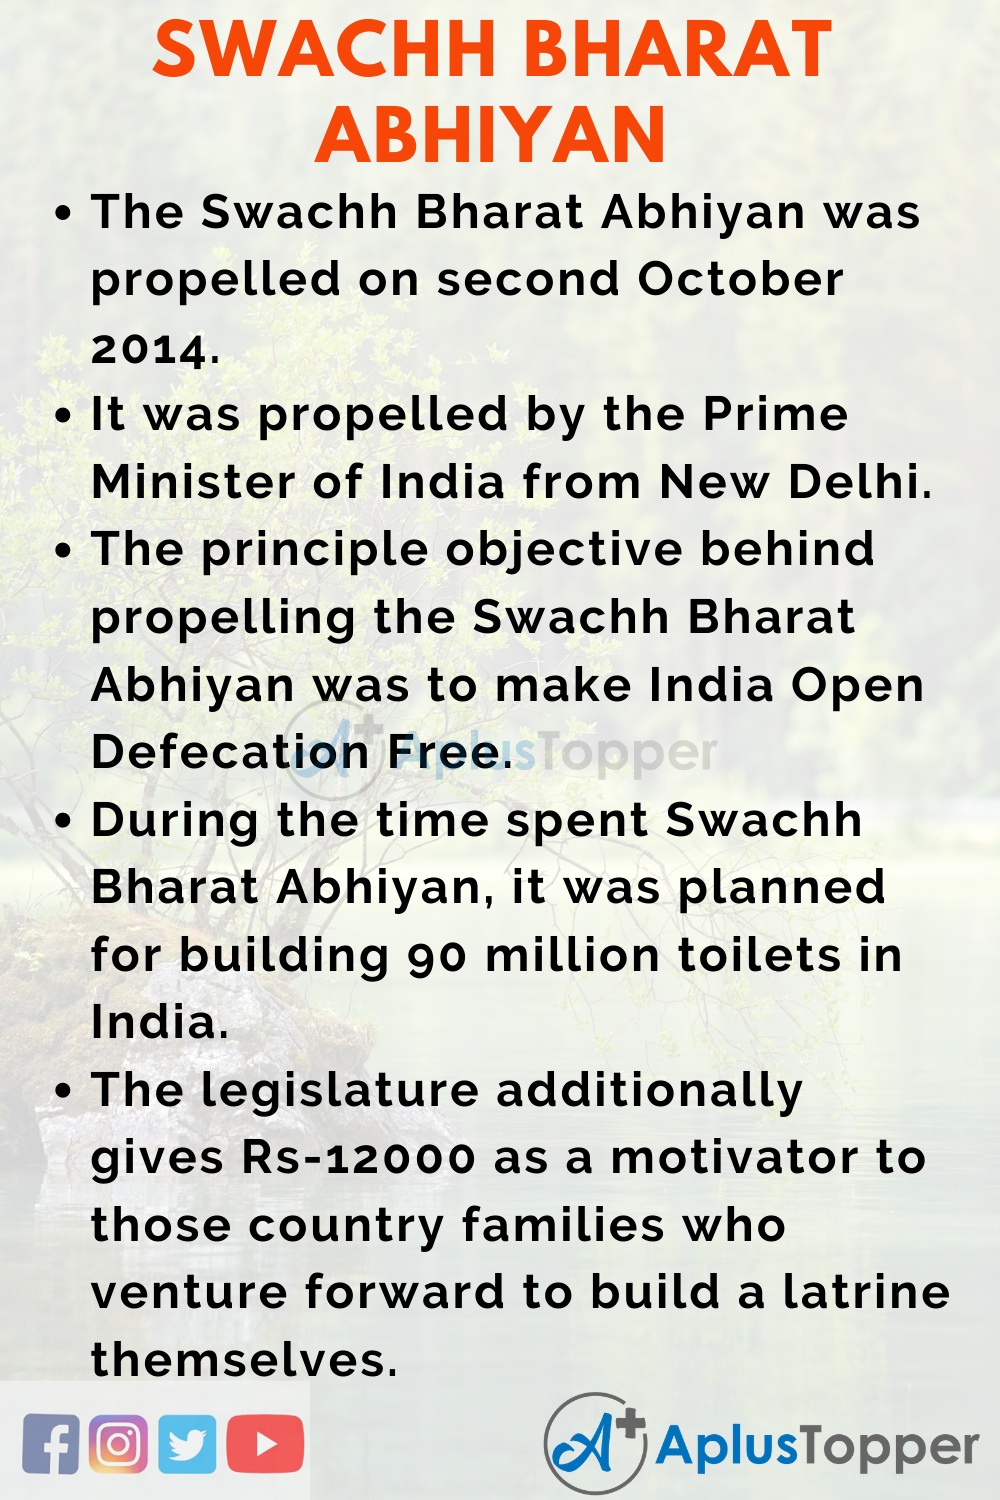 write a speech on swachh bharat abhiyan